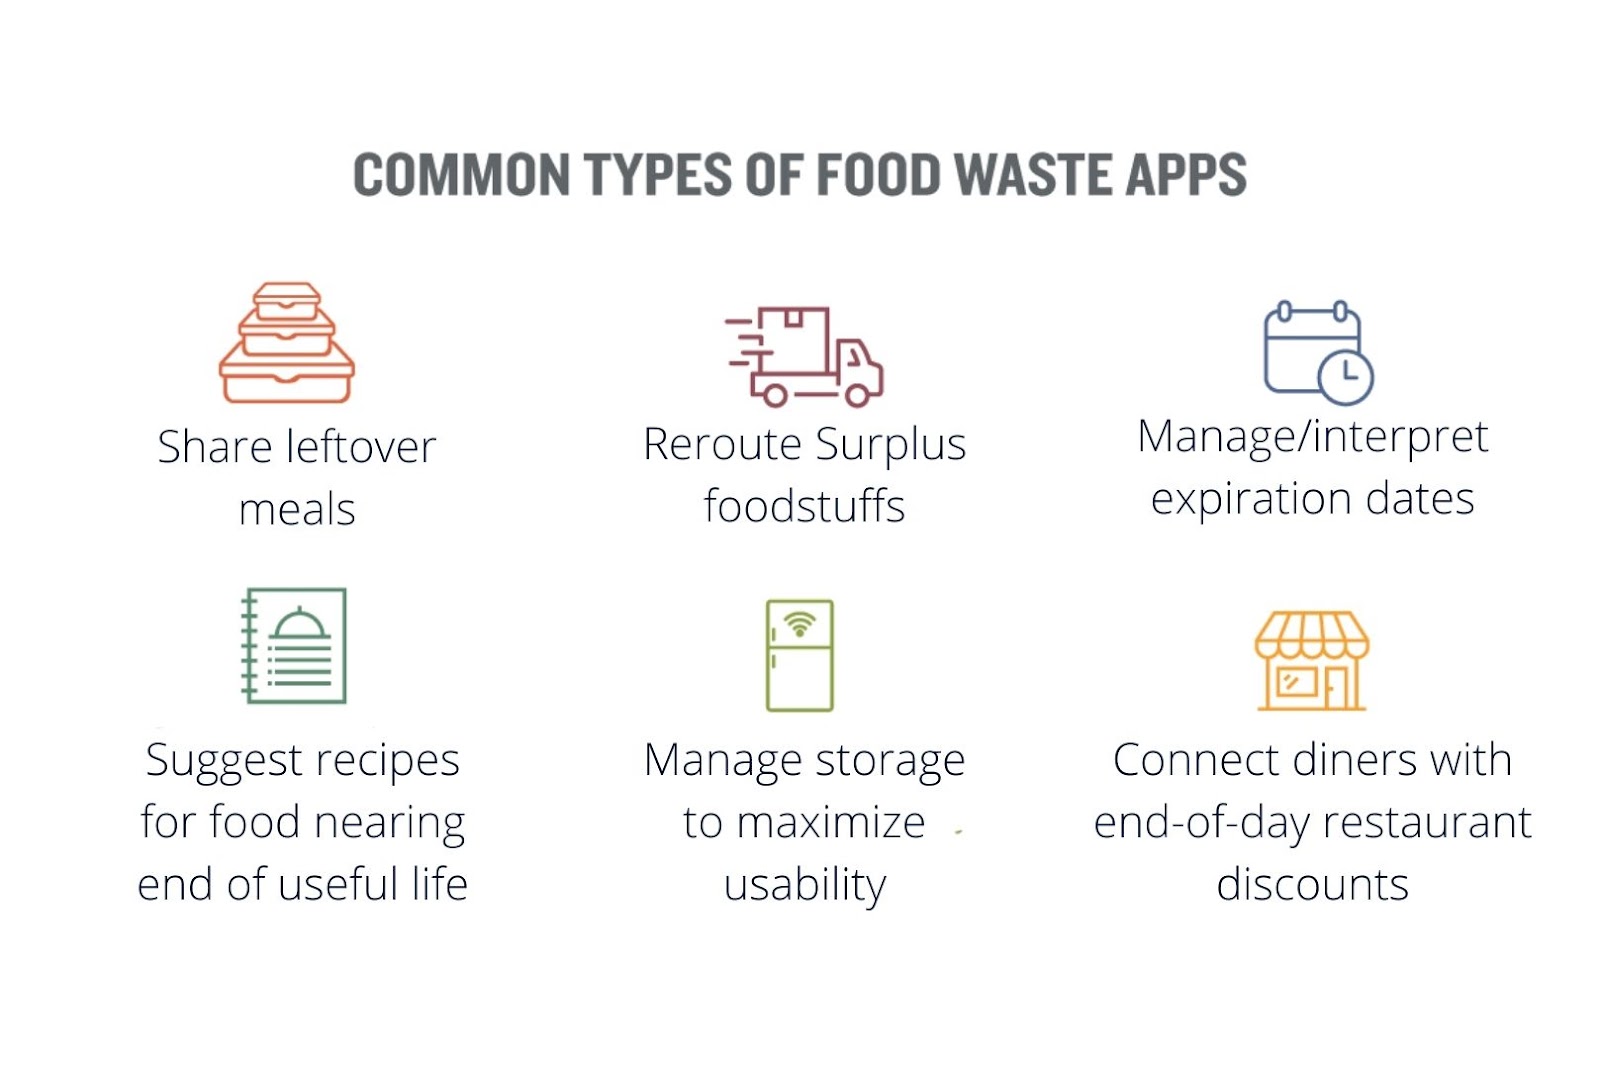 Food app idea to minimize wastage